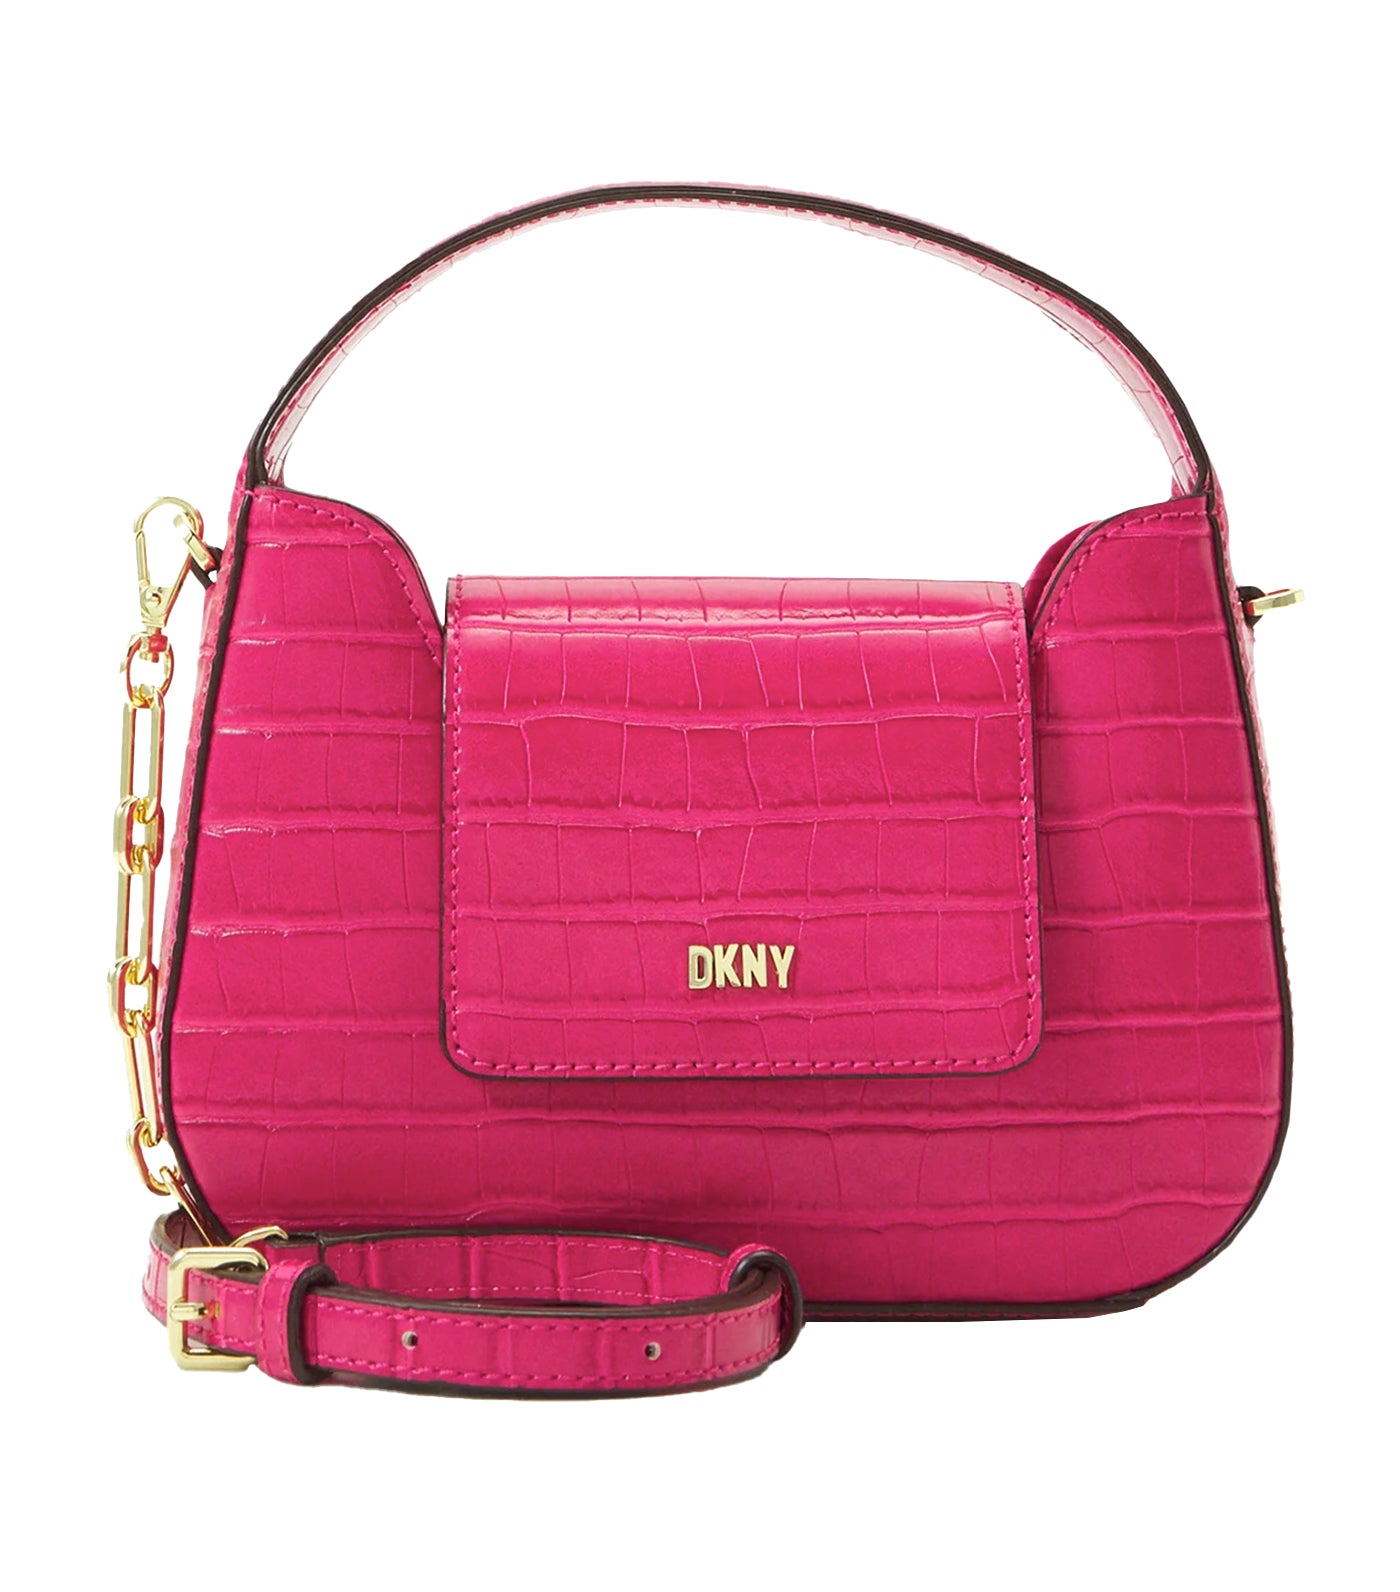 DKNY Kiera Demi Bag, Optic White: Handbags